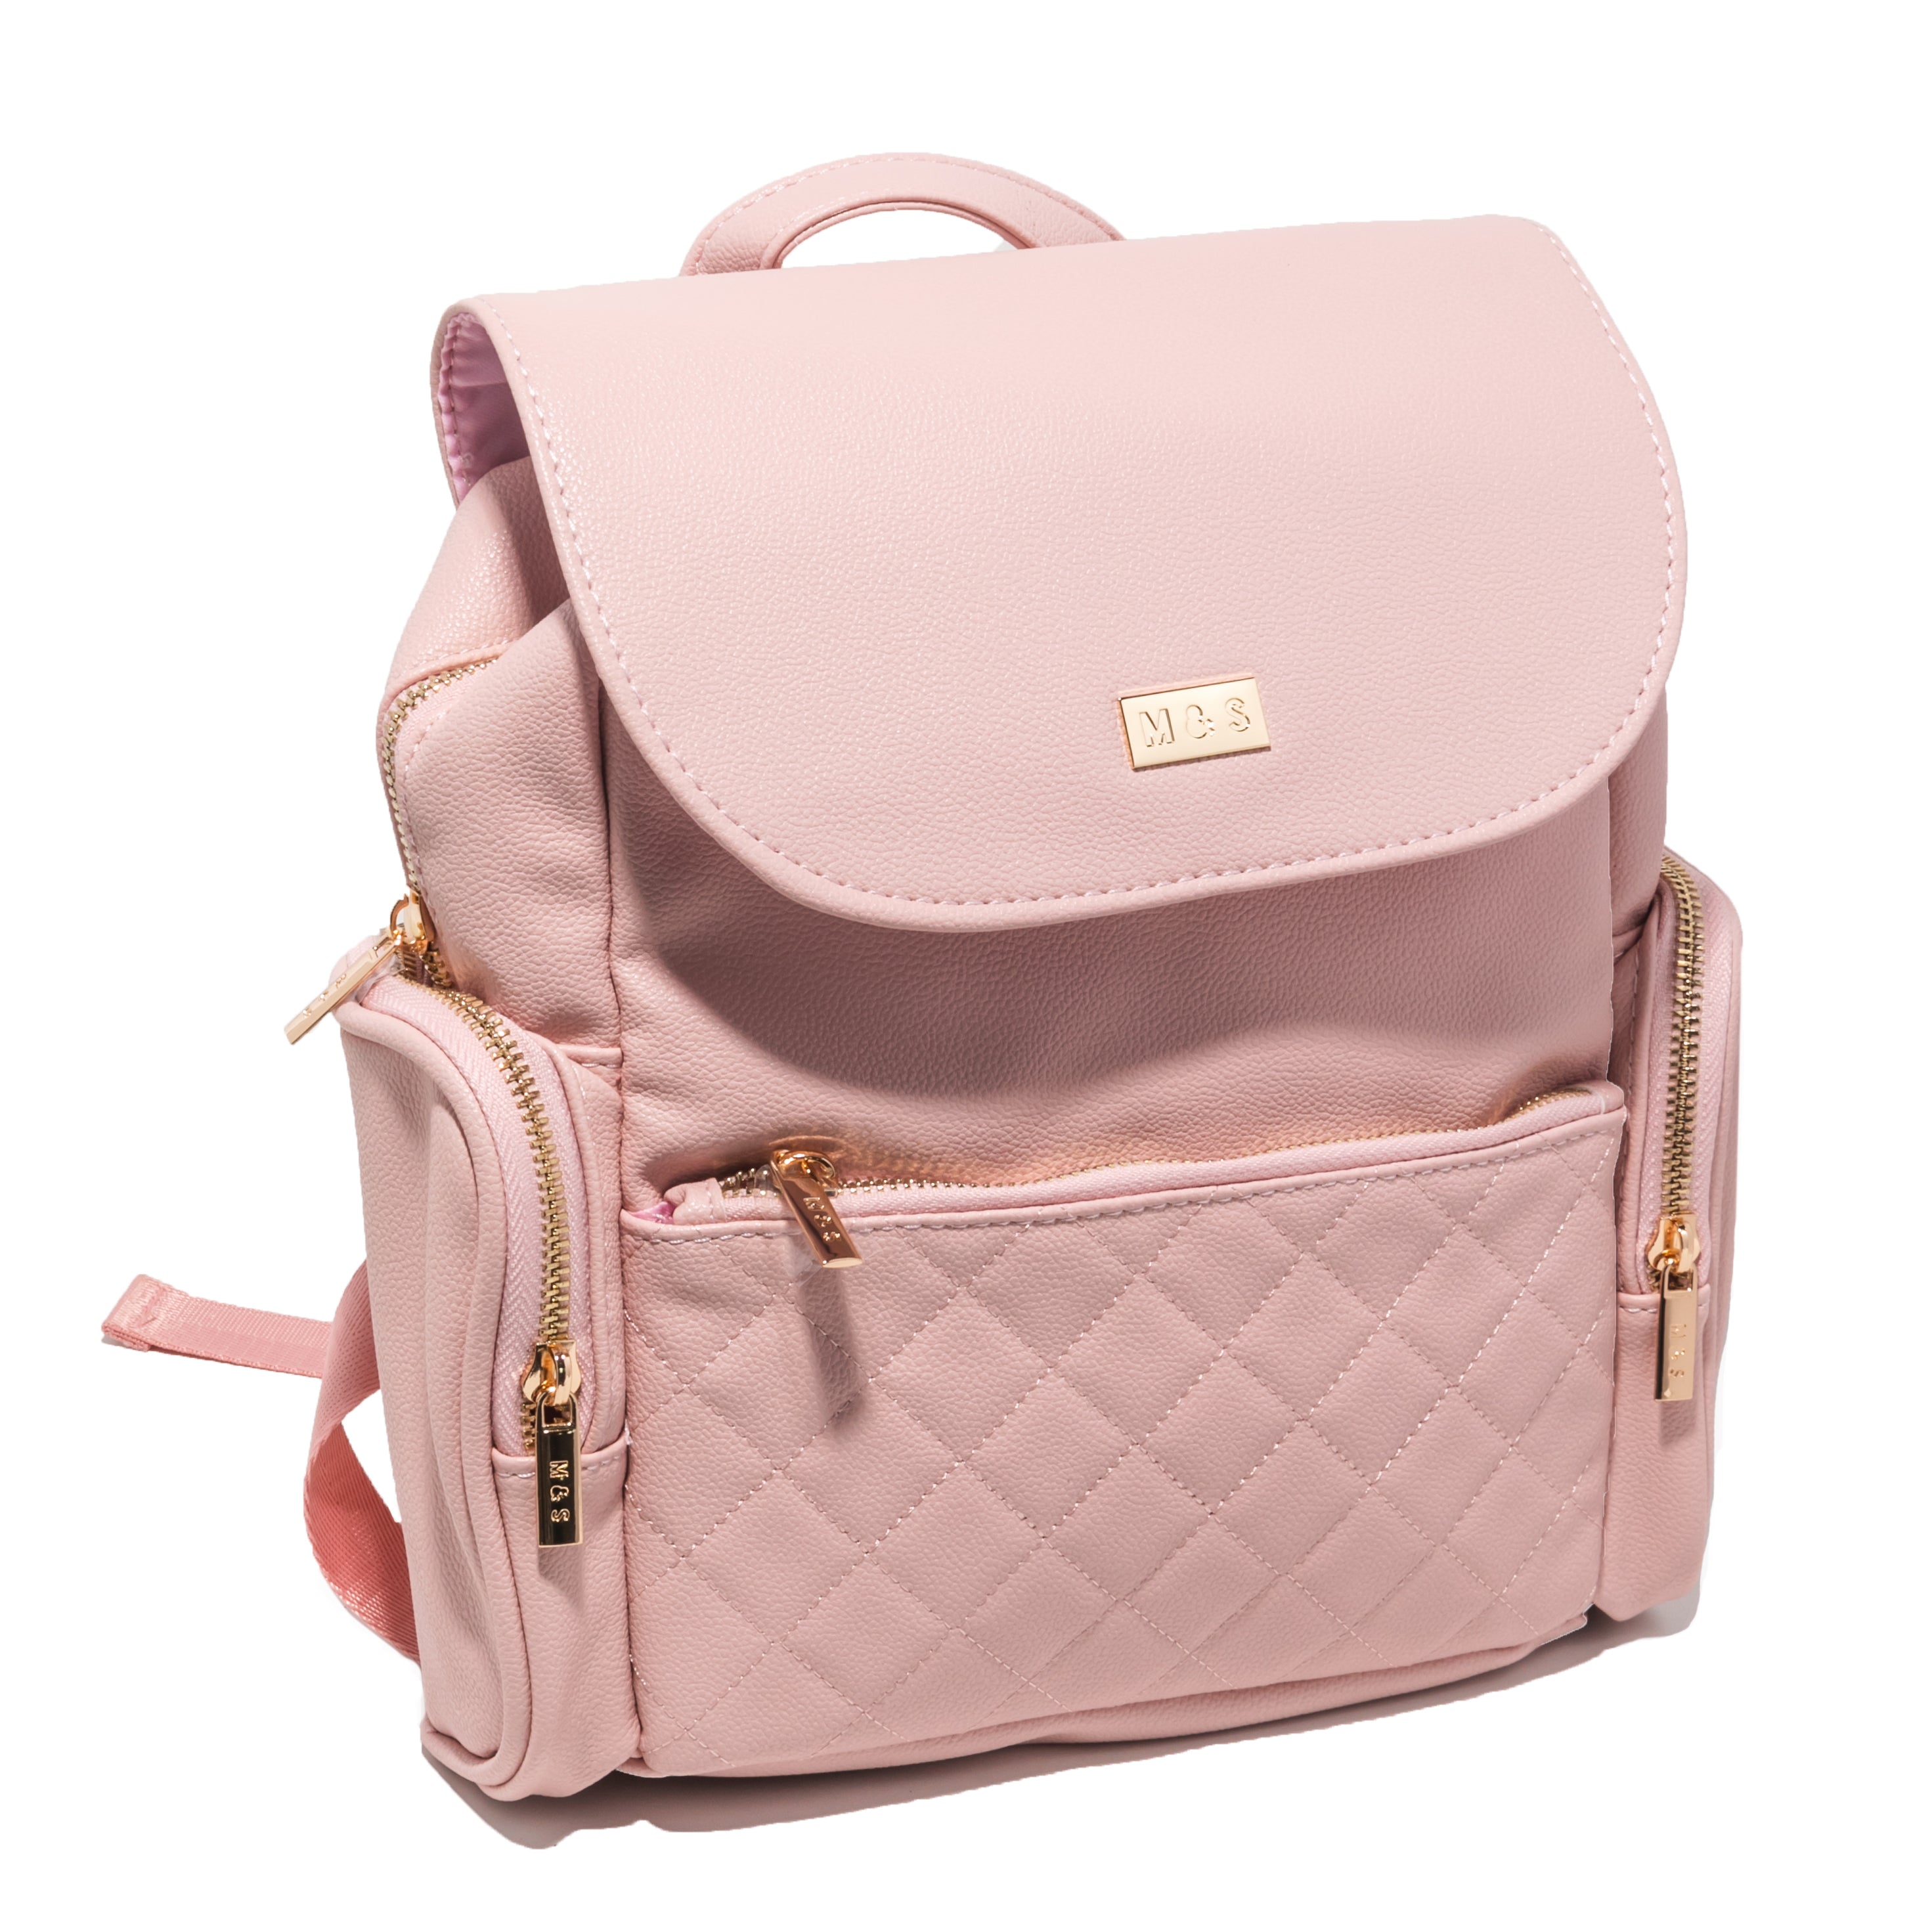 Gymboree Little Llamas Mini Backpack Purse Bag Cream Tan Pink